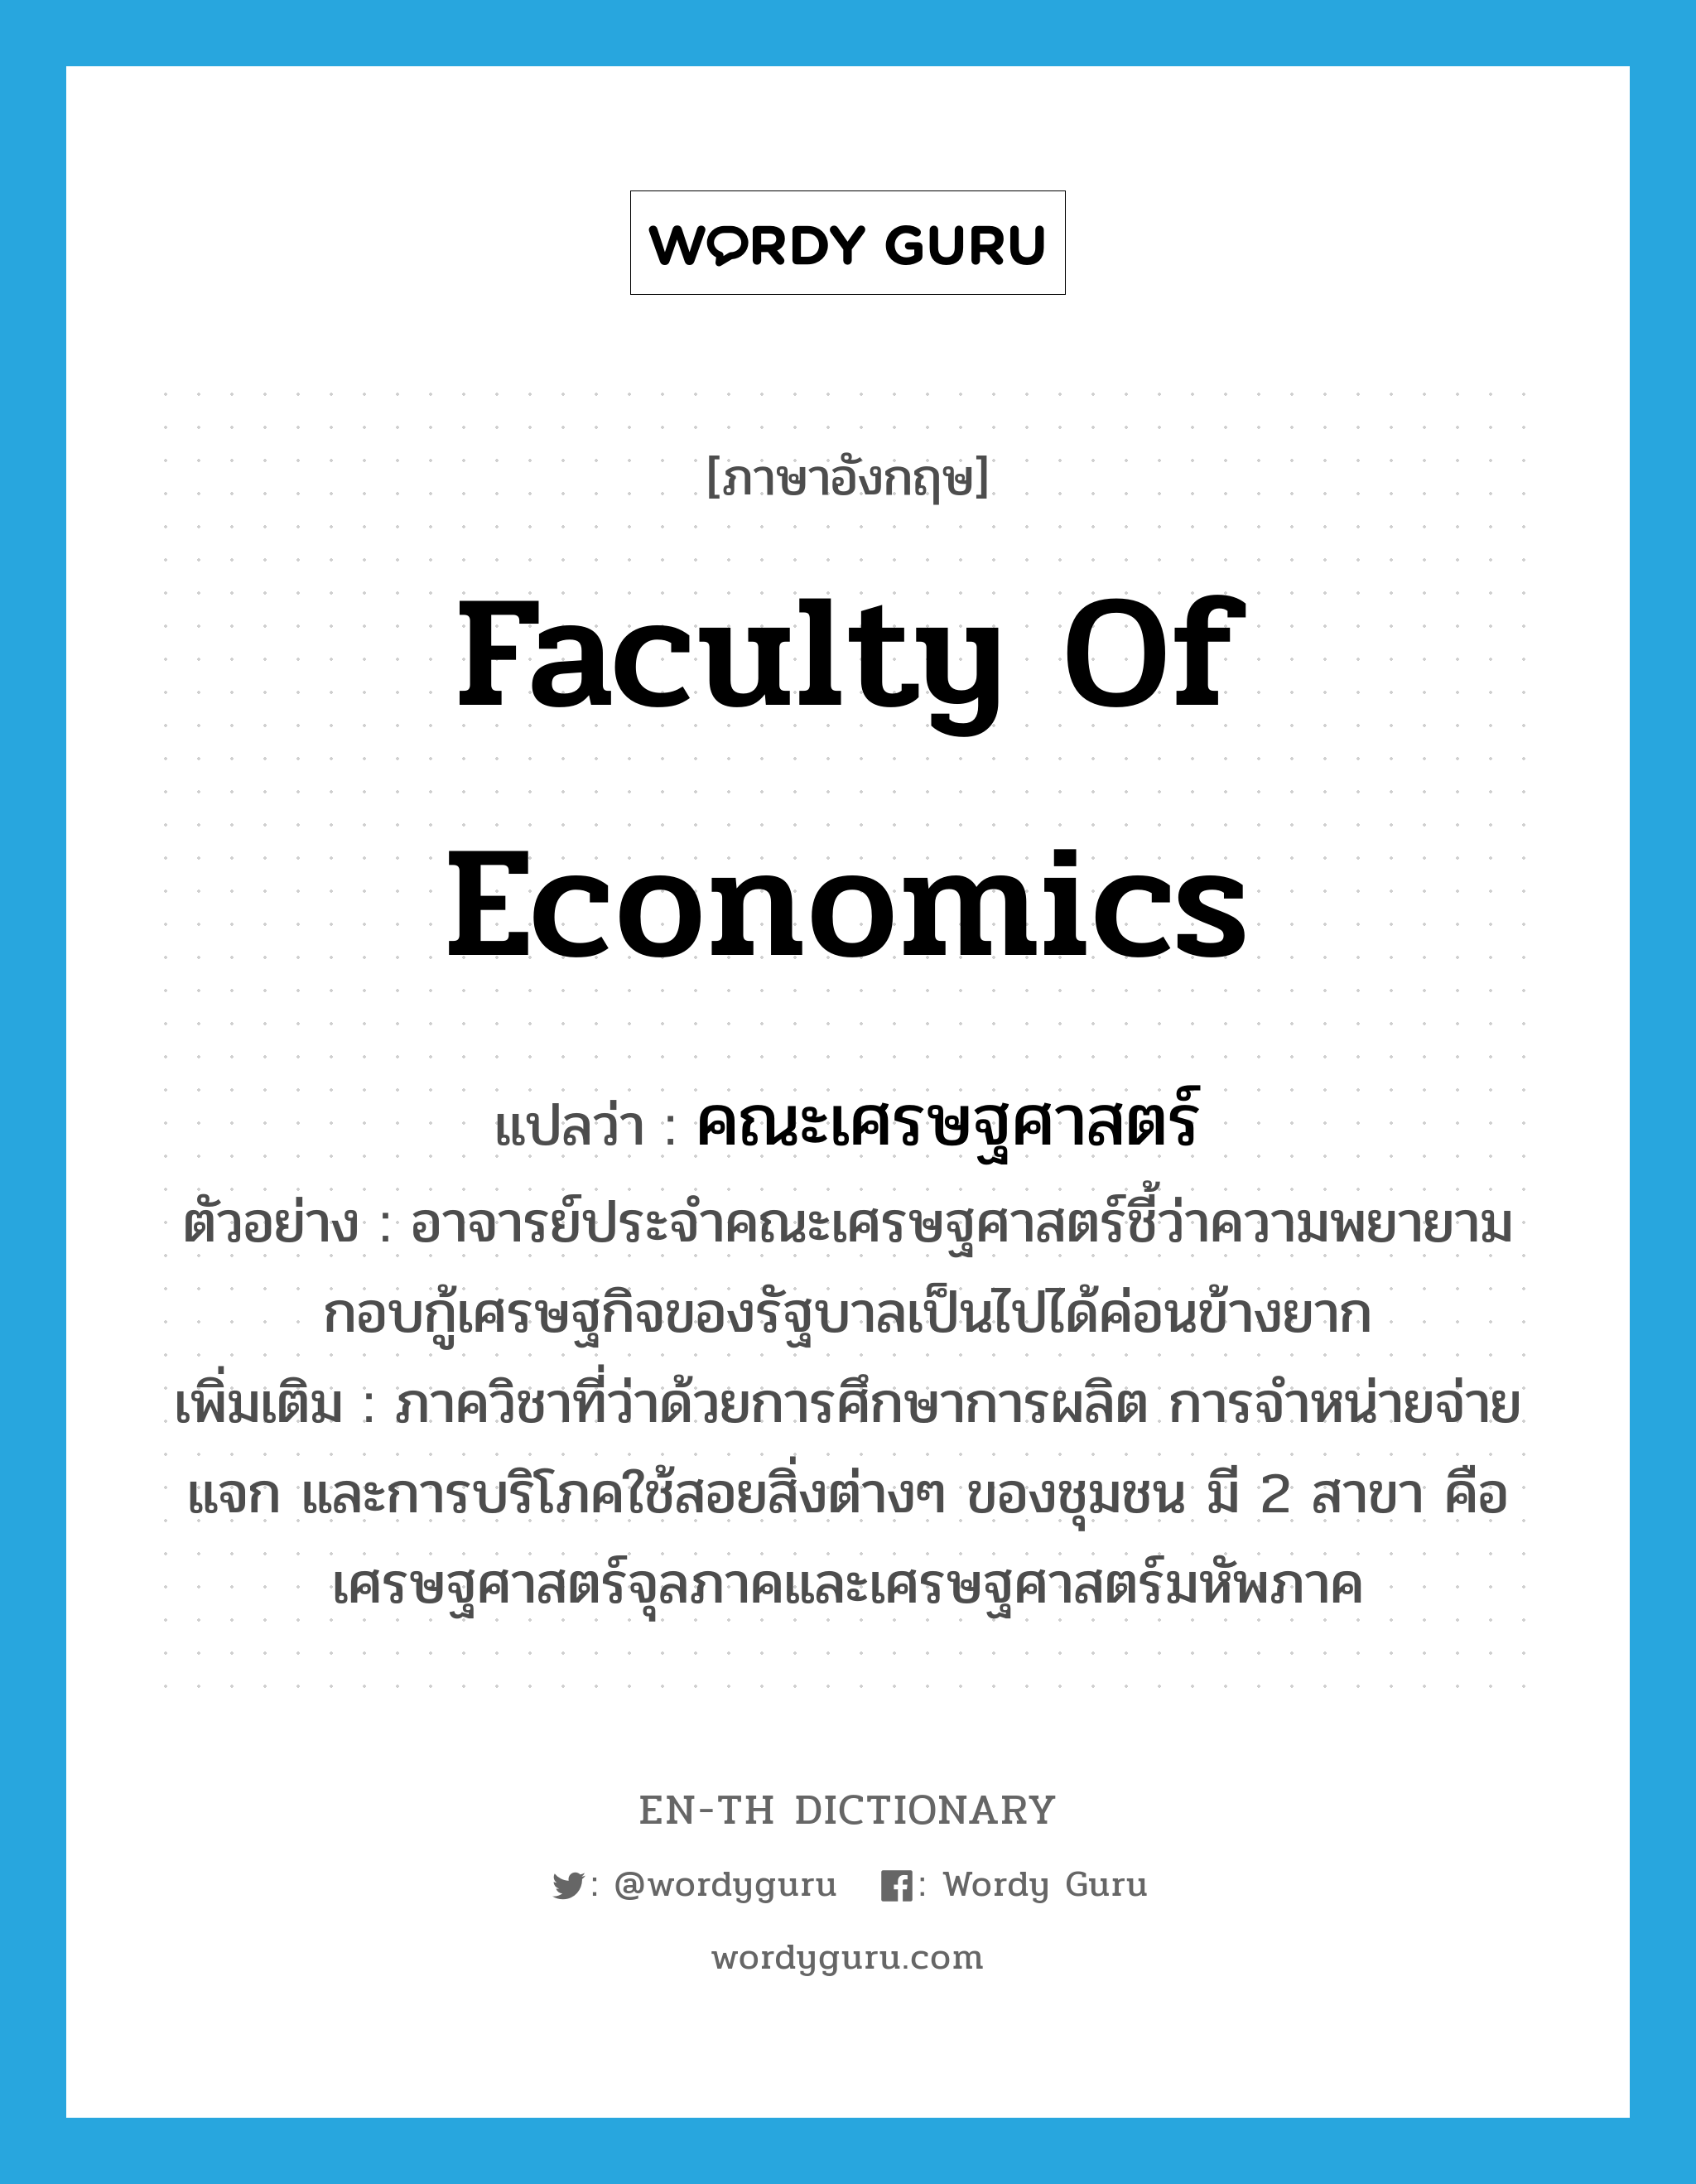 Faculty of Economics แปลว่า?, คำศัพท์ภาษาอังกฤษ Faculty of Economics แปลว่า คณะเศรษฐศาสตร์ ประเภท N ตัวอย่าง อาจารย์ประจำคณะเศรษฐศาสตร์ชี้ว่าความพยายามกอบกู้เศรษฐกิจของรัฐบาลเป็นไปได้ค่อนข้างยาก เพิ่มเติม ภาควิชาที่ว่าด้วยการศึกษาการผลิต การจำหน่ายจ่ายแจก และการบริโภคใช้สอยสิ่งต่างๆ ของชุมชน มี 2 สาขา คือ เศรษฐศาสตร์จุลภาคและเศรษฐศาสตร์มหัพภาค หมวด N